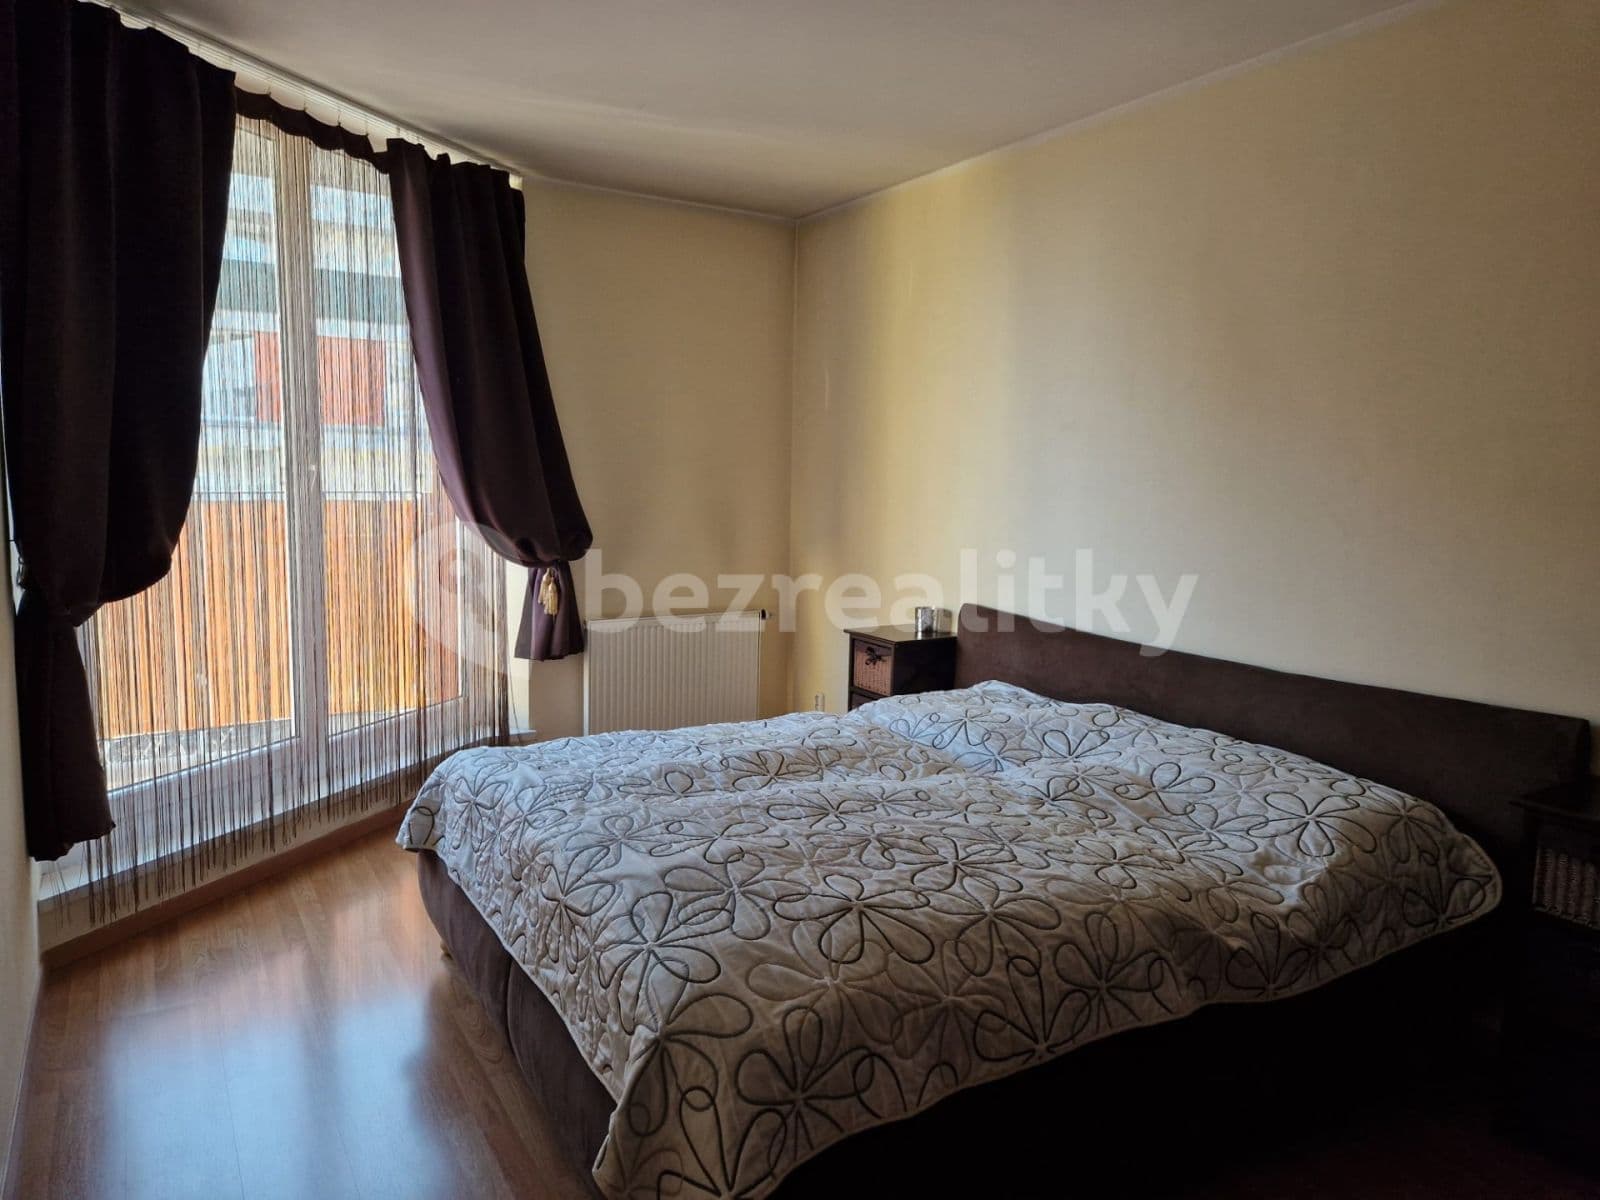 1 bedroom with open-plan kitchen flat for sale, 61 m², Tulešická, Prague, Prague